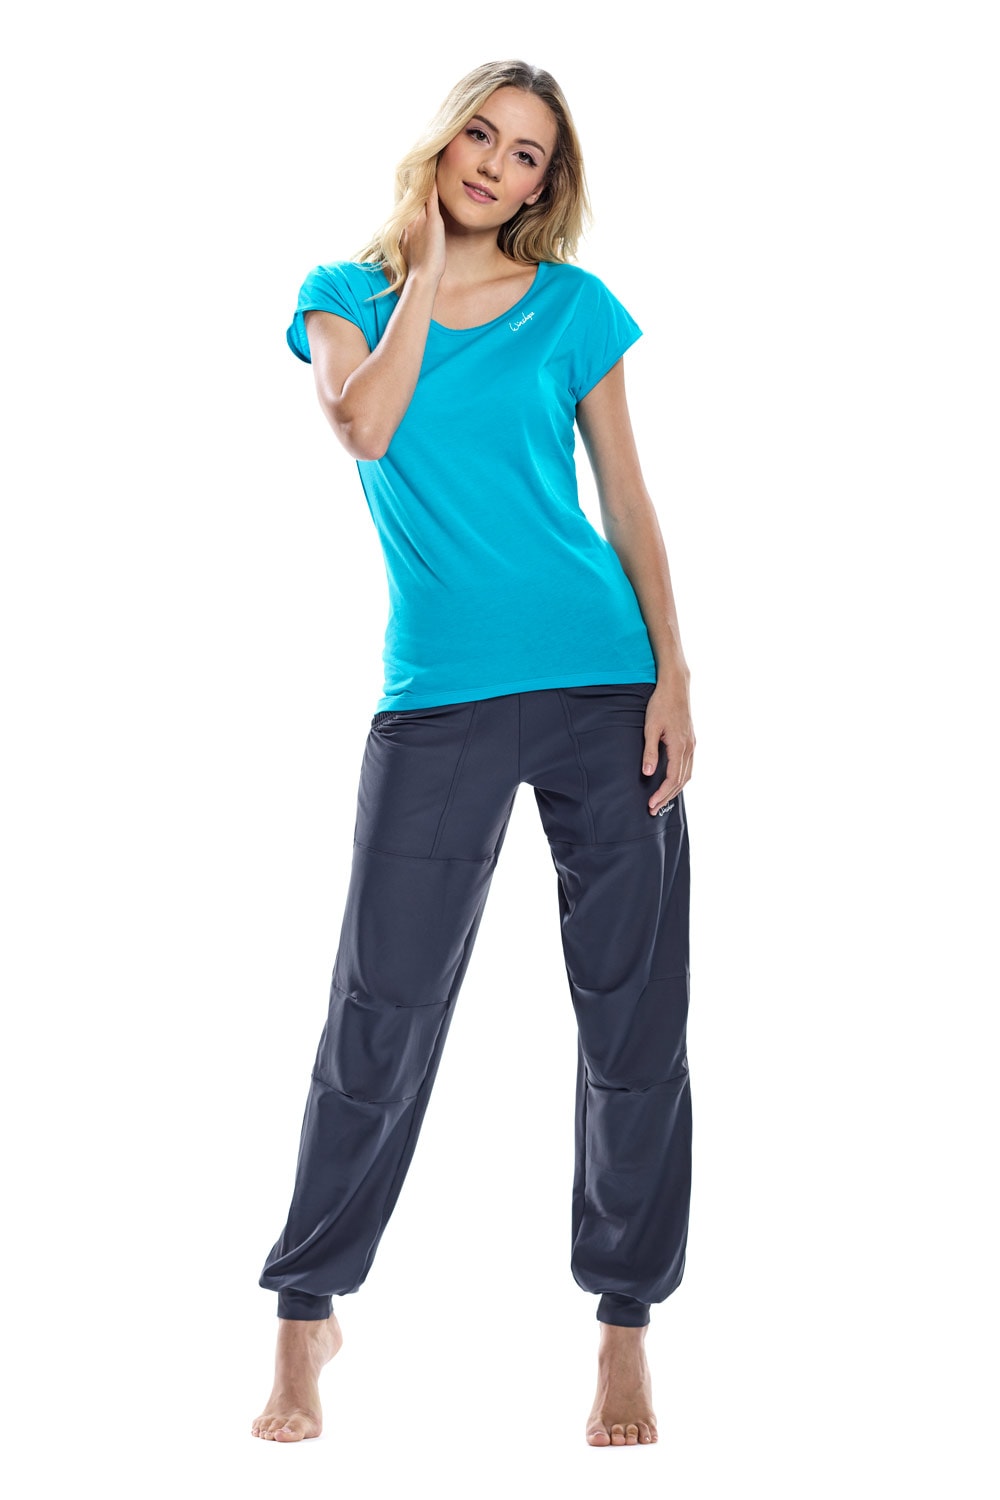 Winshape Sporthose »Functional Comfort Leisure Time Trousers LEI101C«, High  Waist online kaufen | BAUR